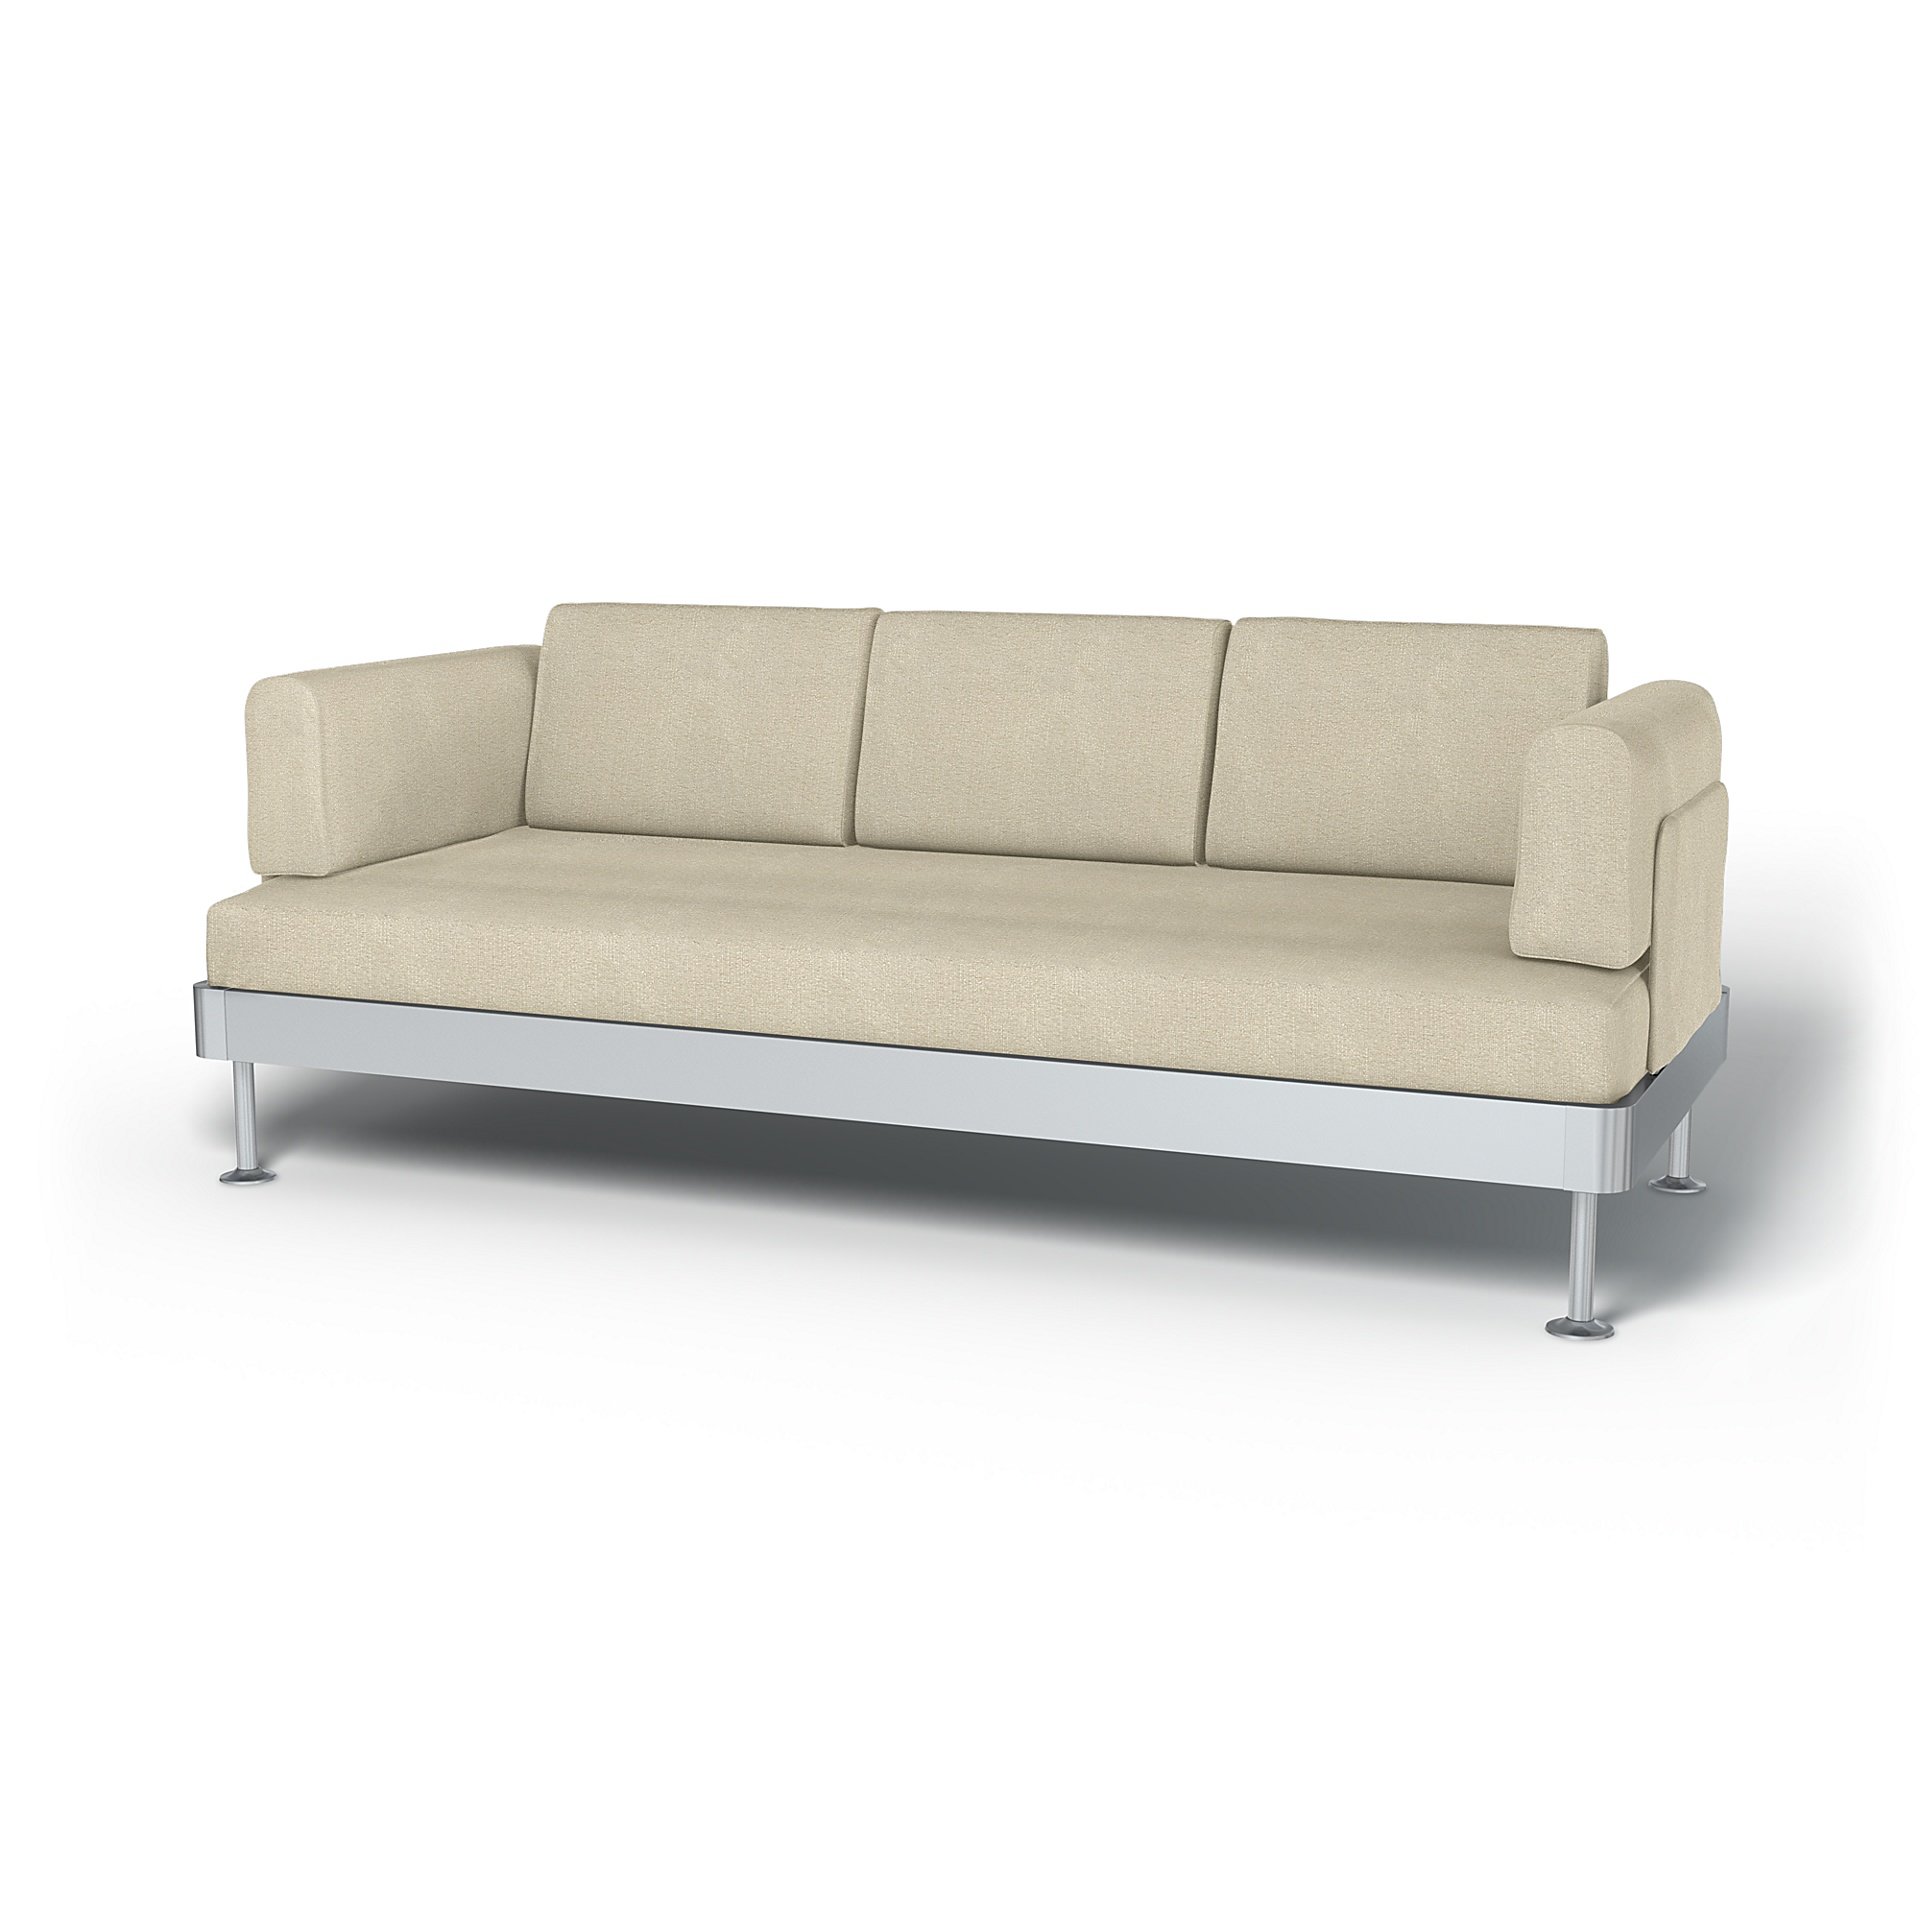 IKEA - Delaktig 3 Seater Sofa Cover, Cream, Boucle & Texture - Bemz